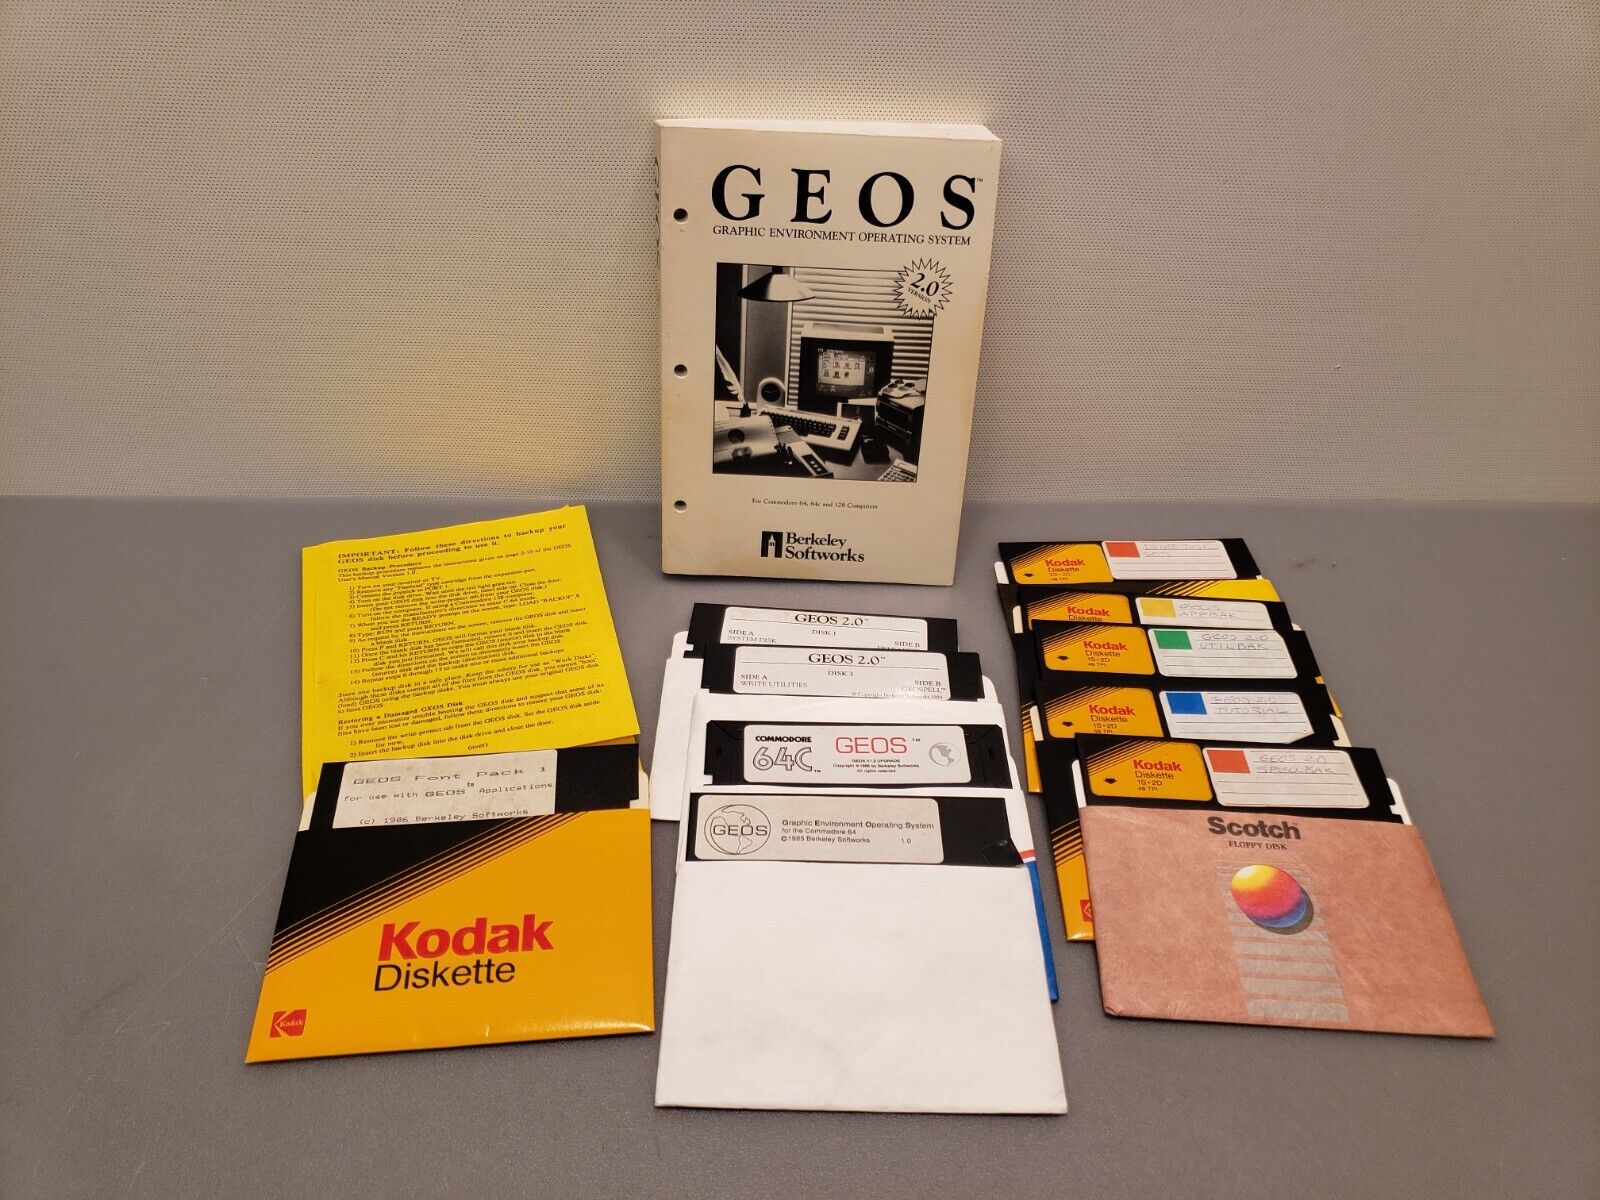 GEOS 2.0 Commodore 64 64C 128 Computer Graphic Environment OS Software No Box